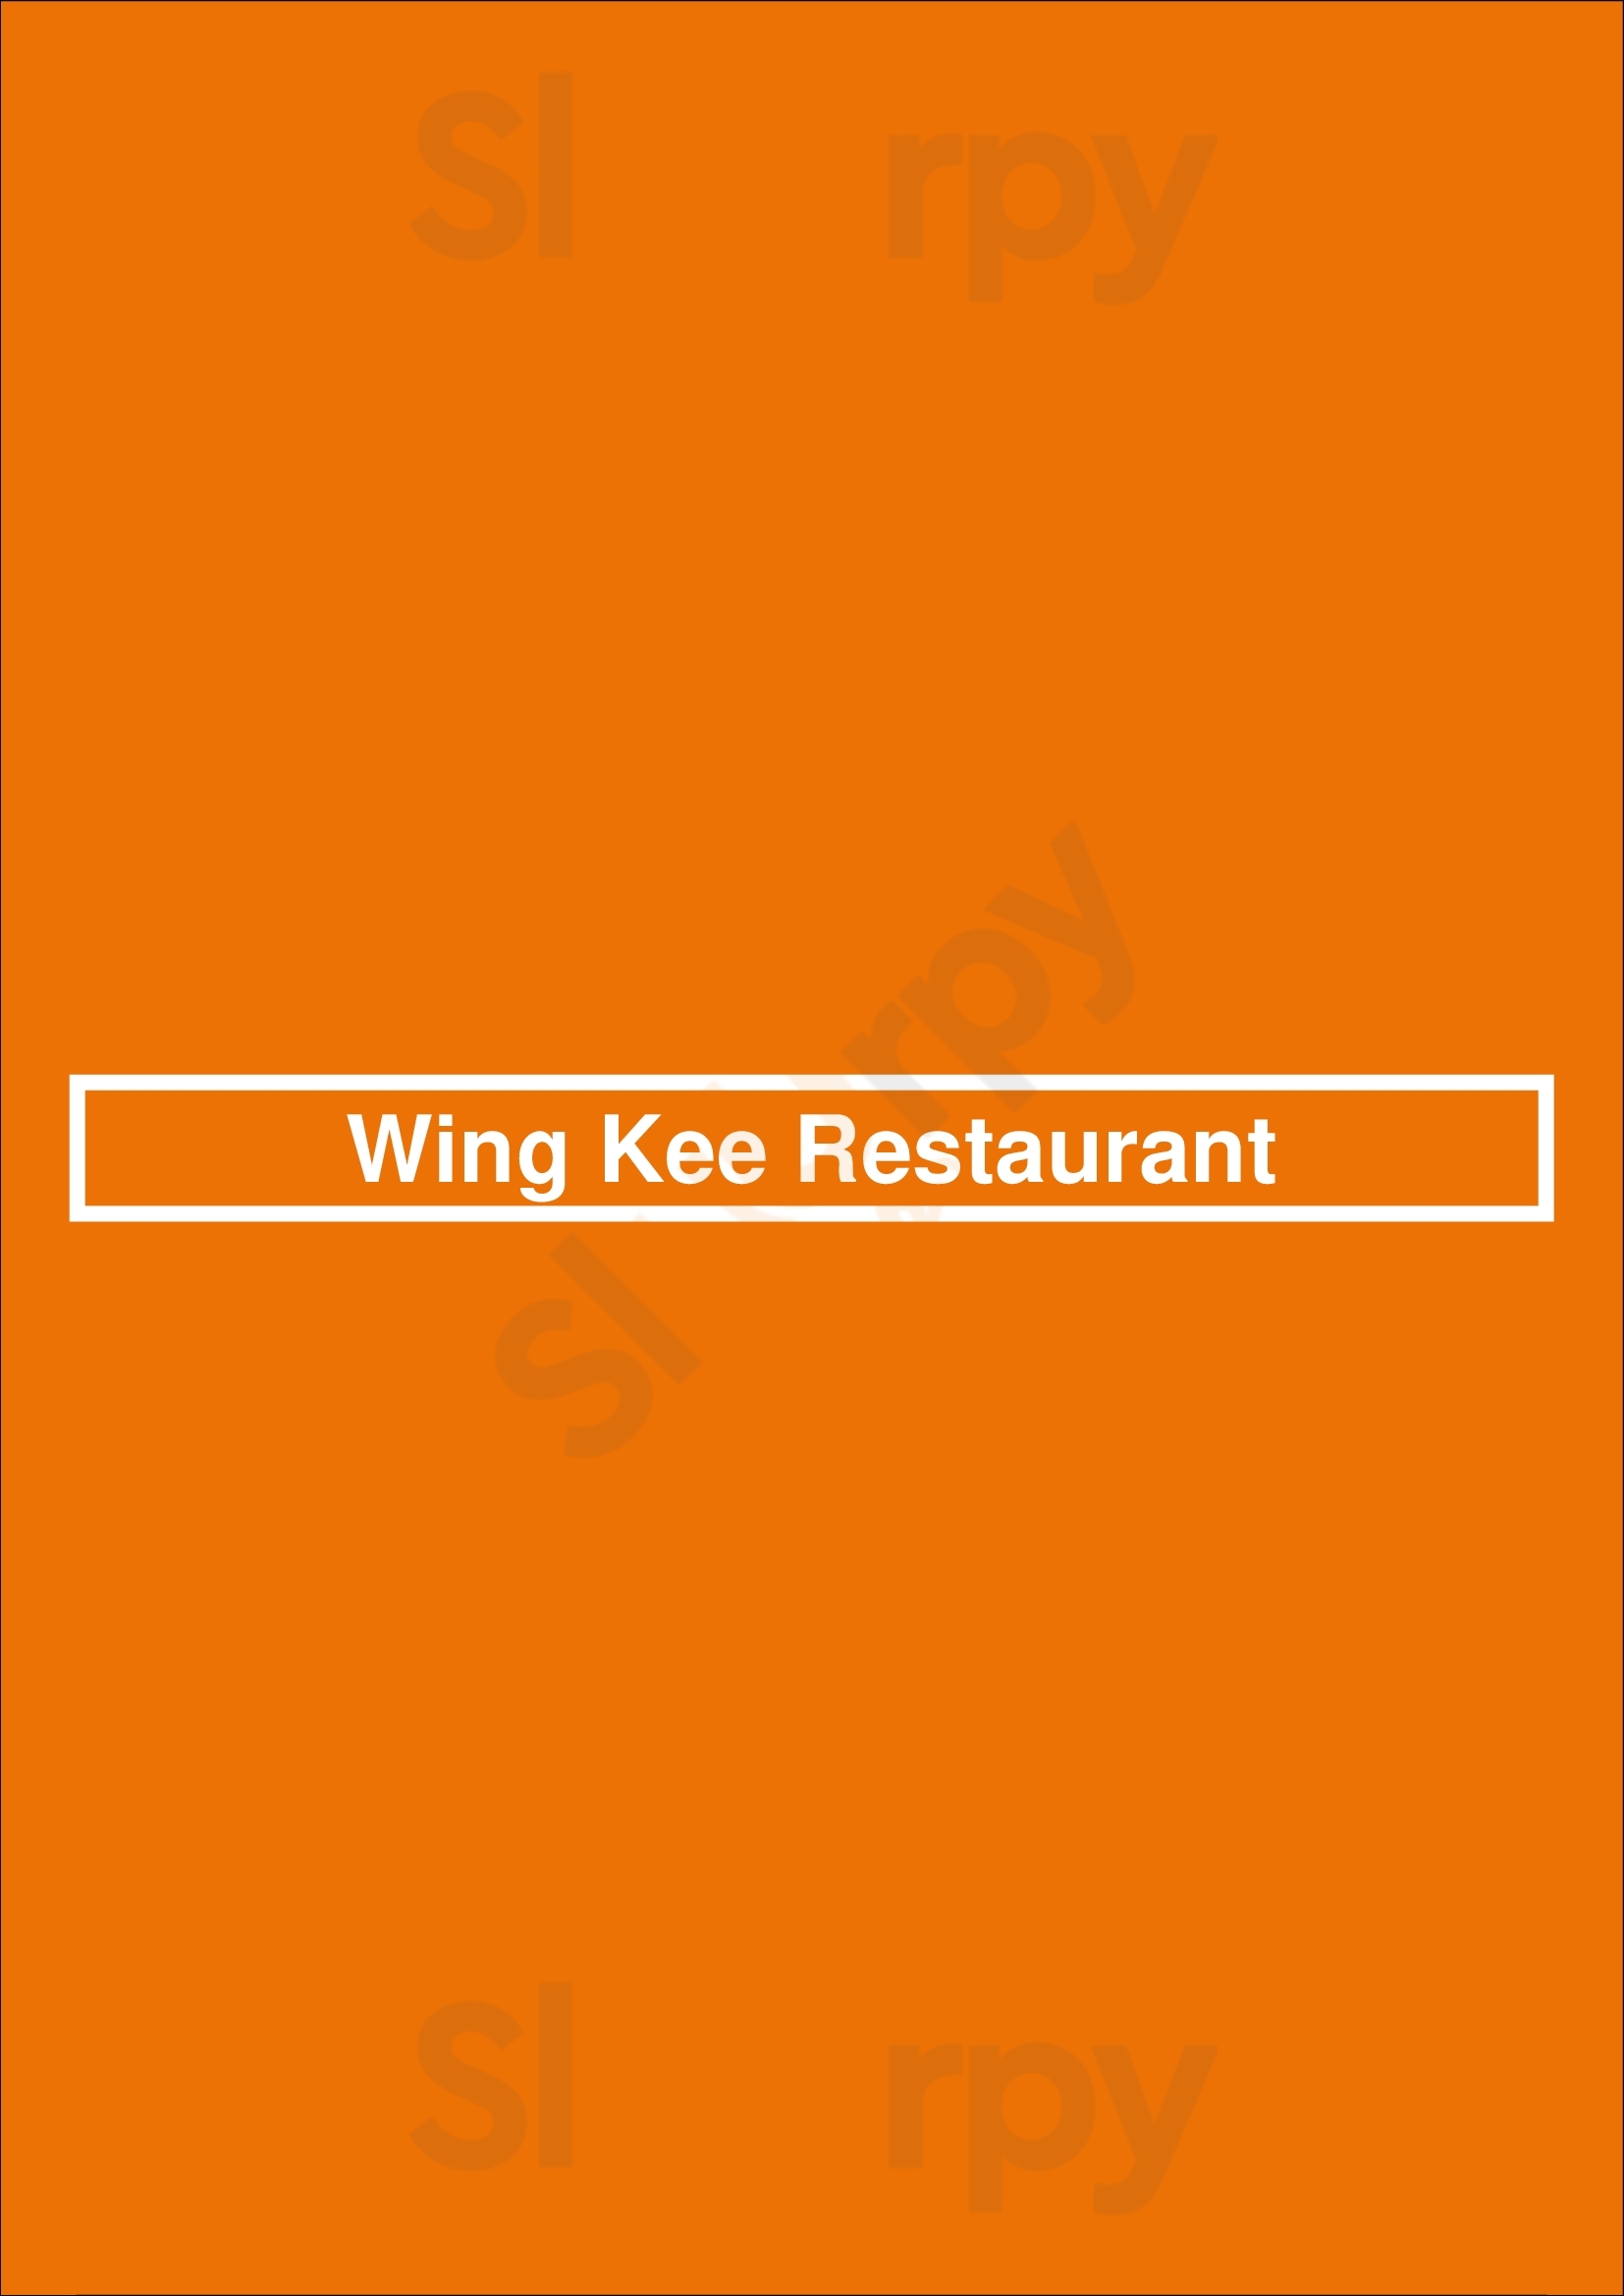 Wing Kee Restaurant Richmond Menu - 1